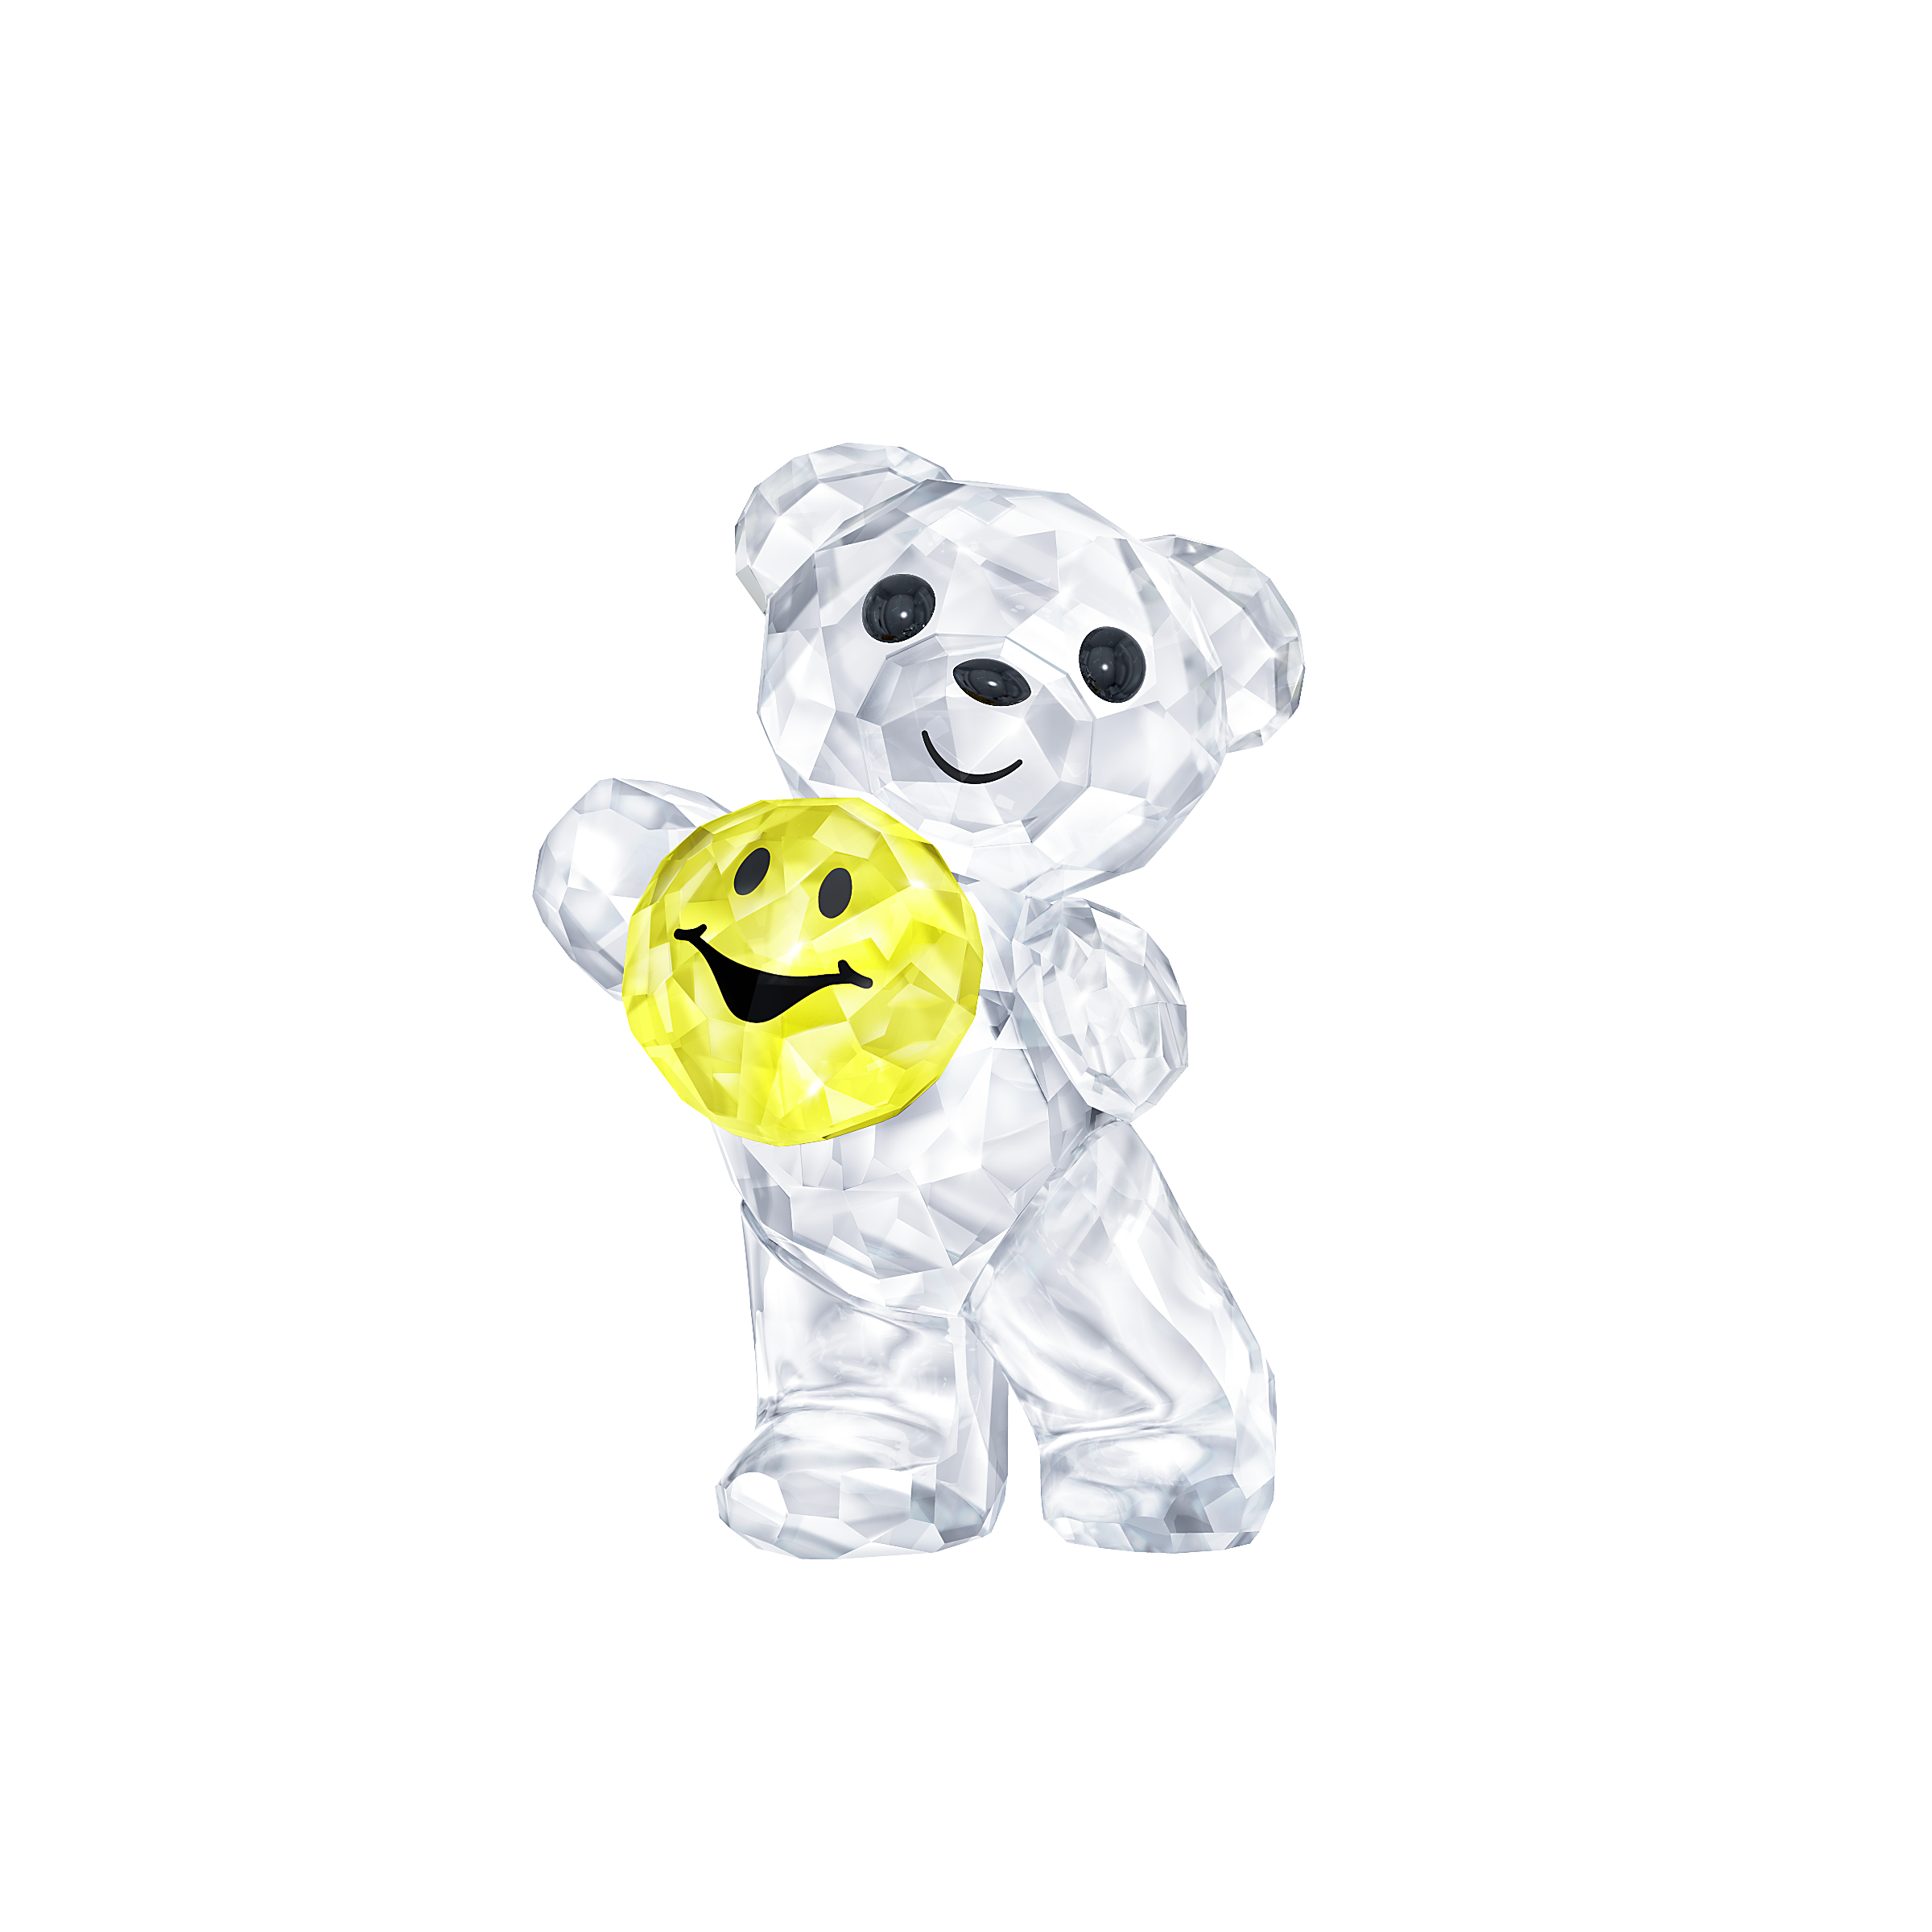 Kris Bear - A Smile for you by SWAROVSKI